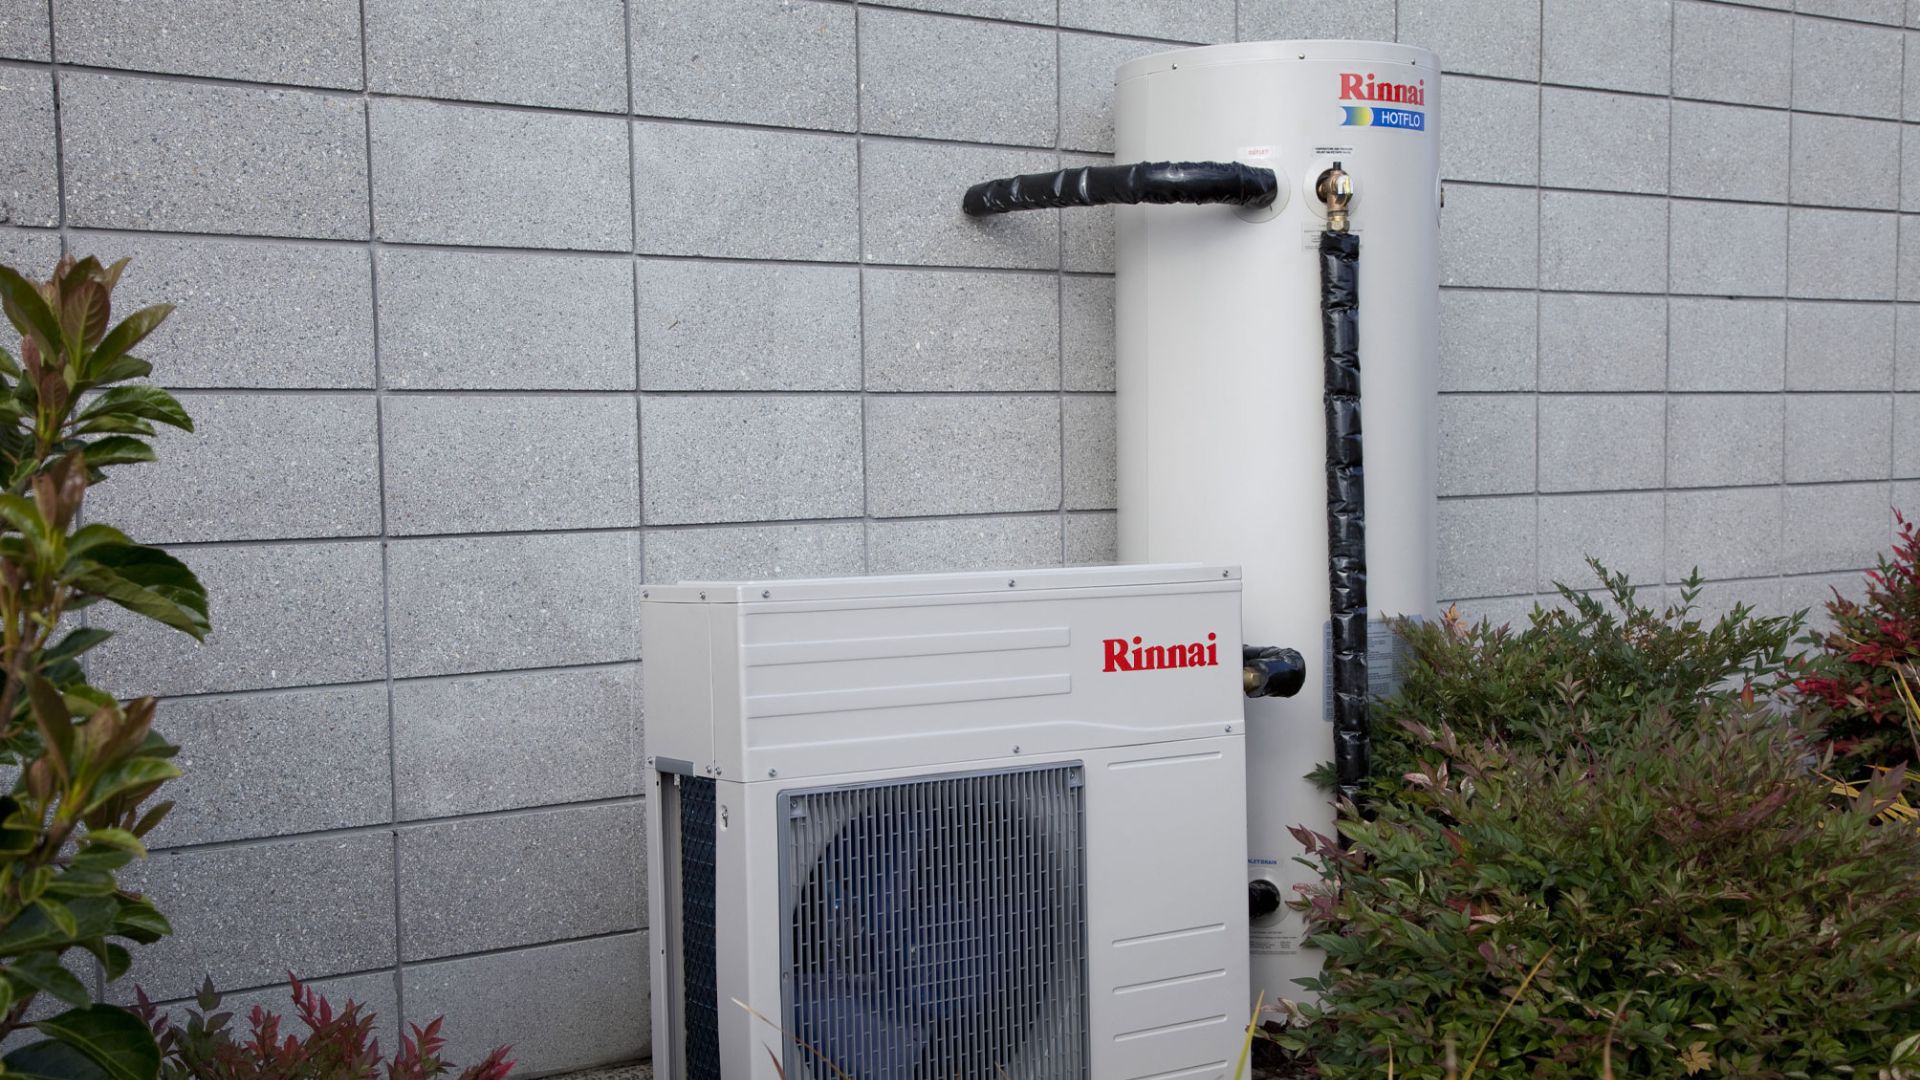 Heat pump hot water system